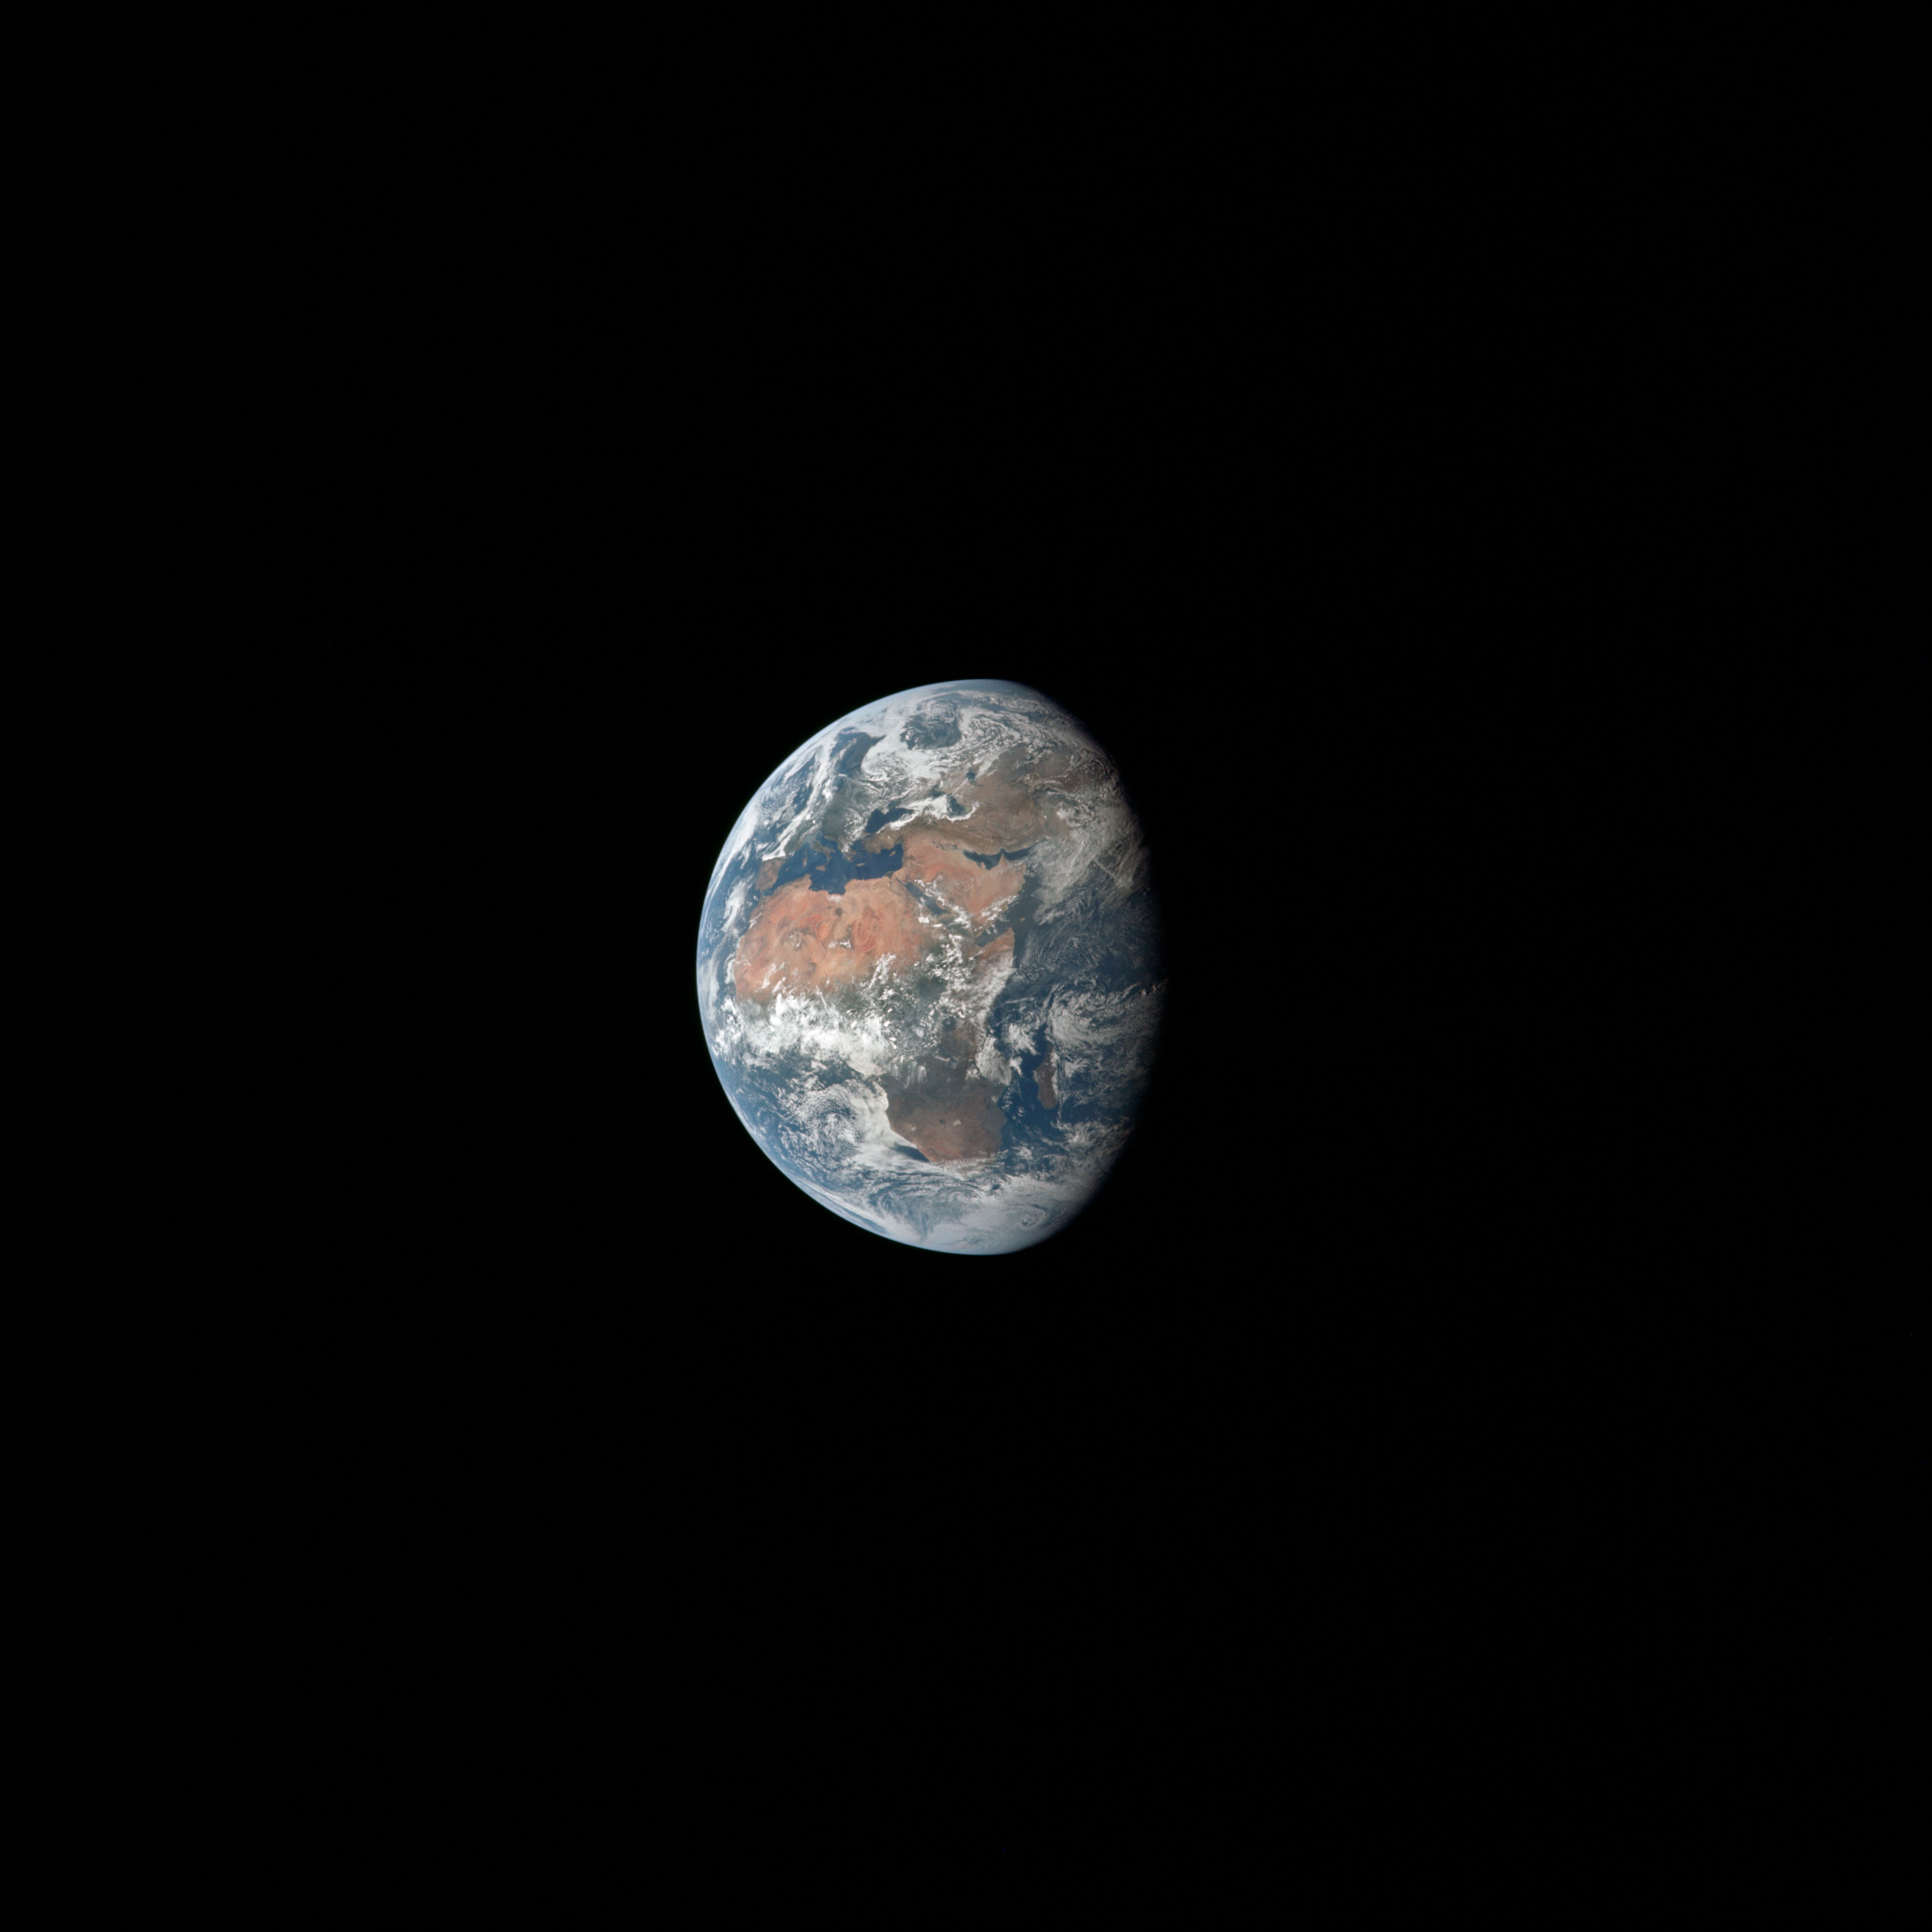 Earth as seen by Apollo 11 astronauts